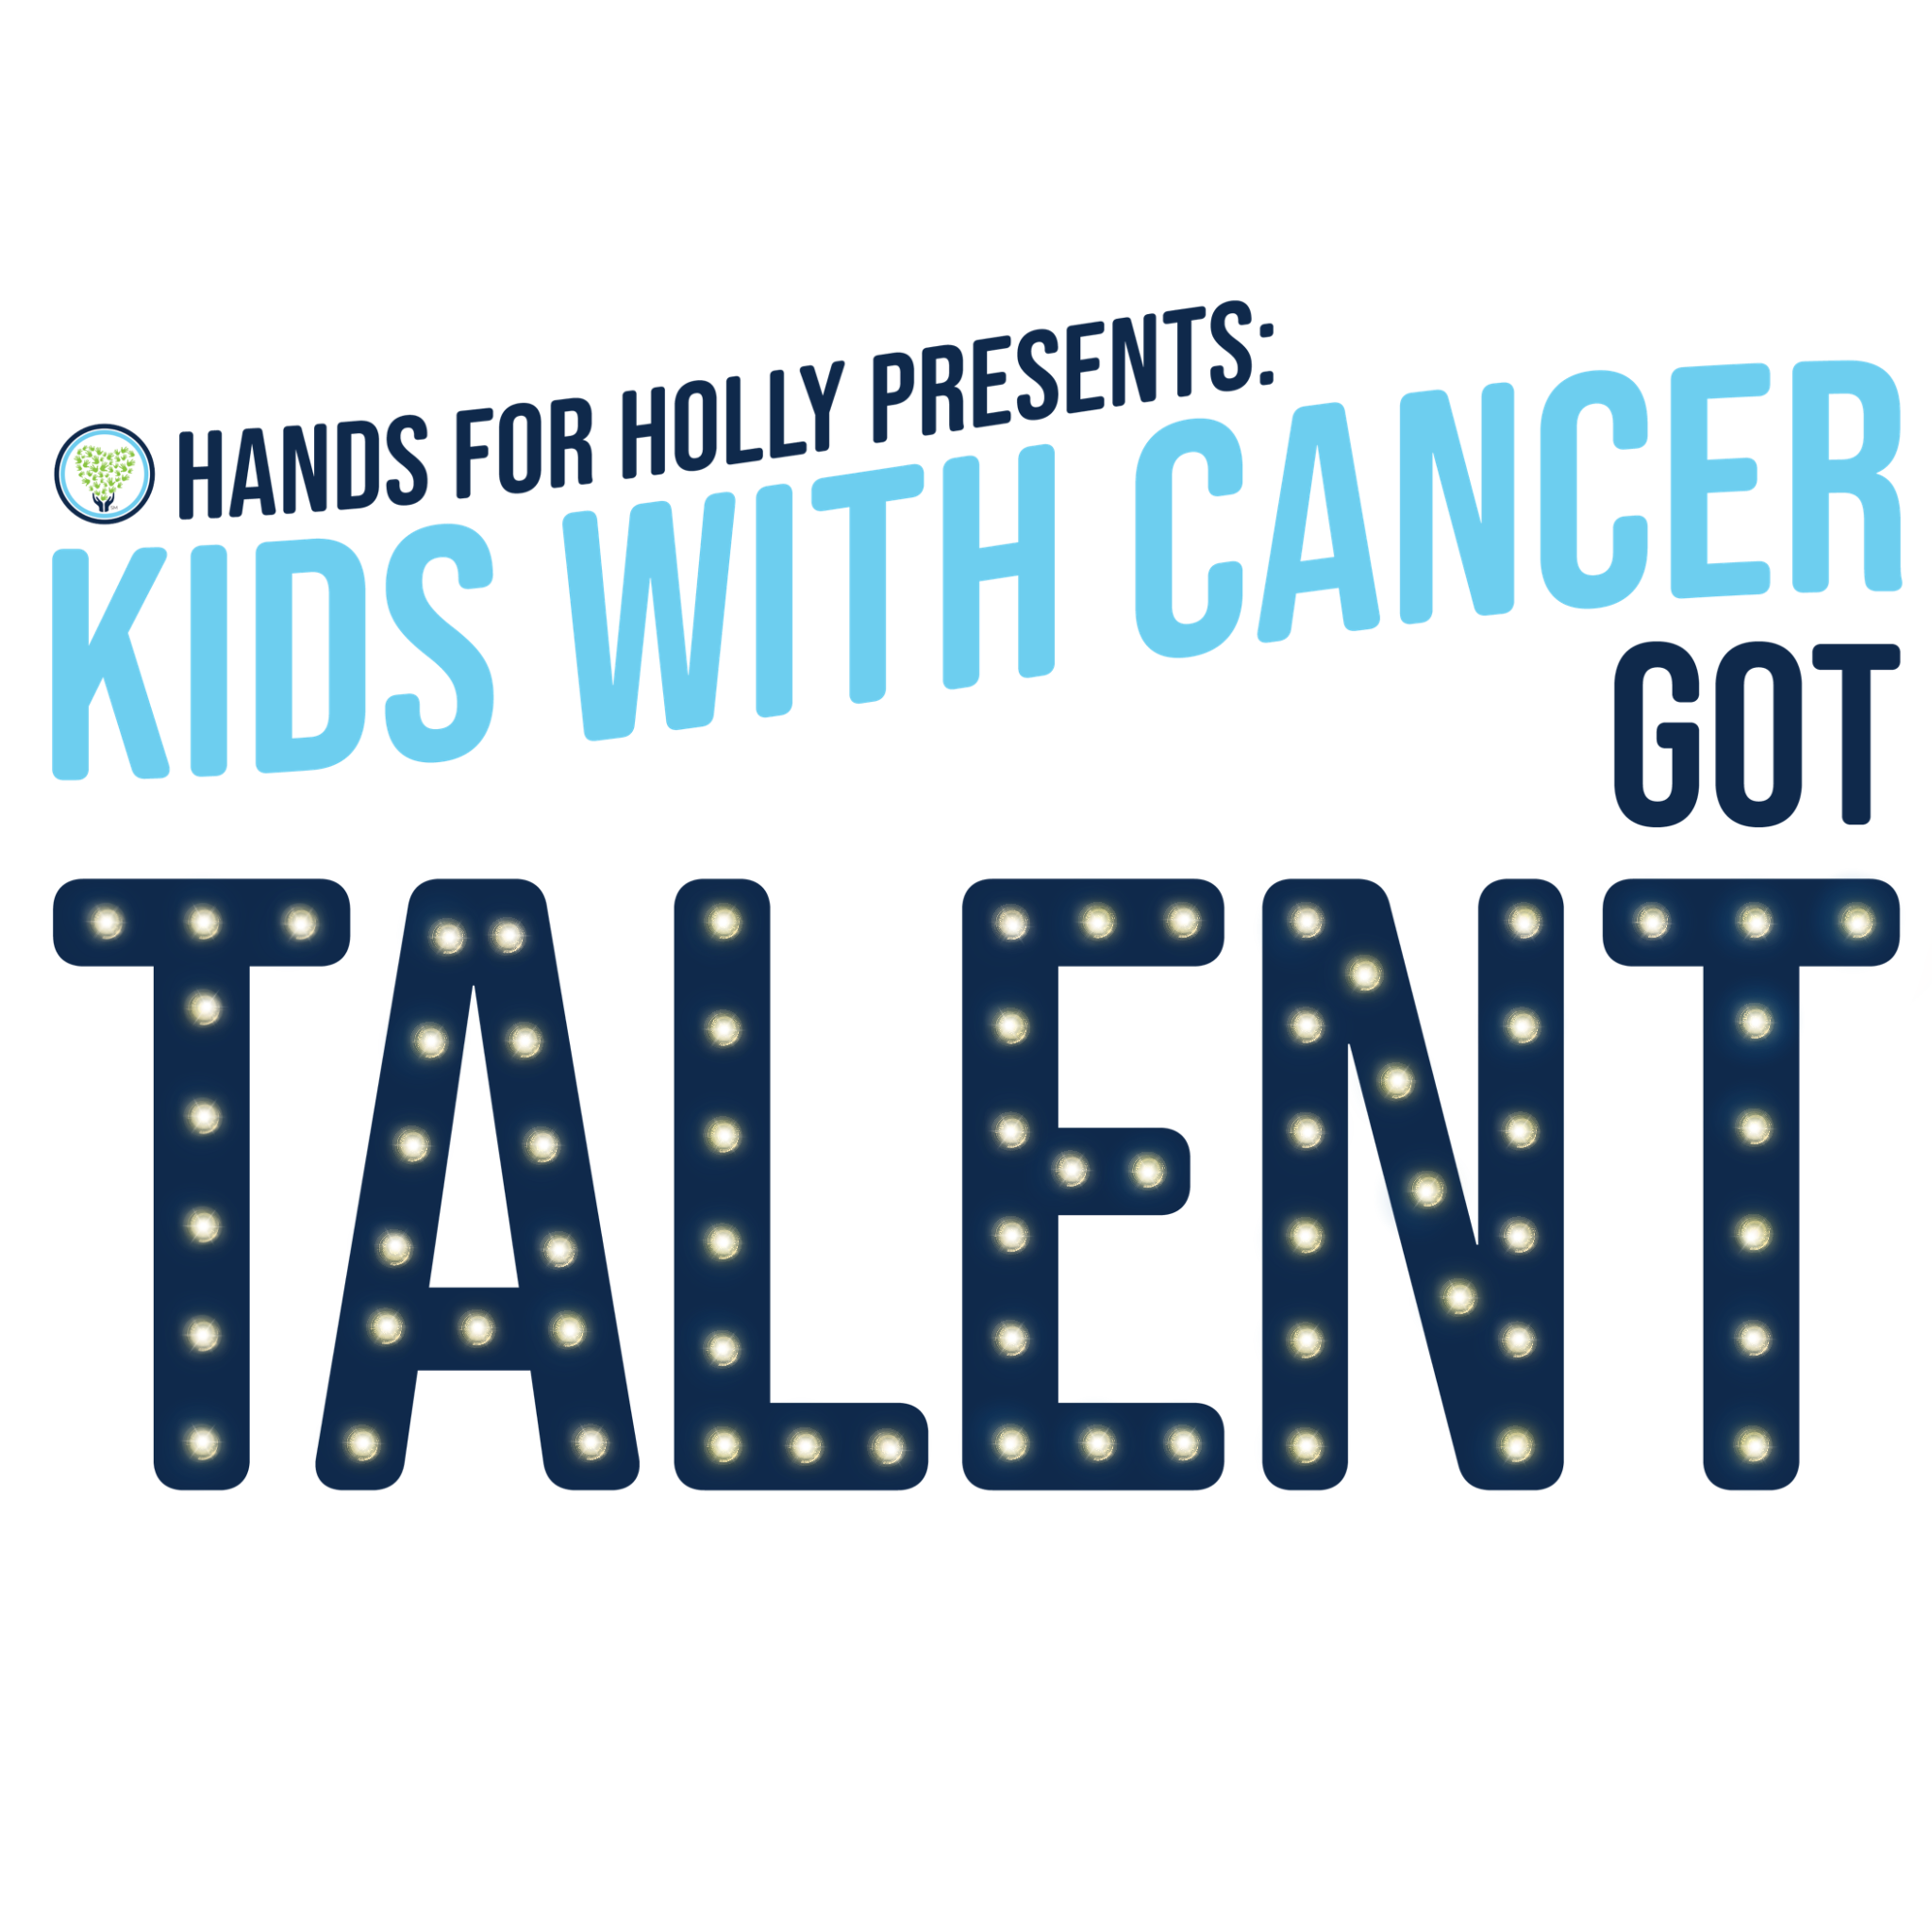 Kids with Cancer Got Talent — Jessica McGuire